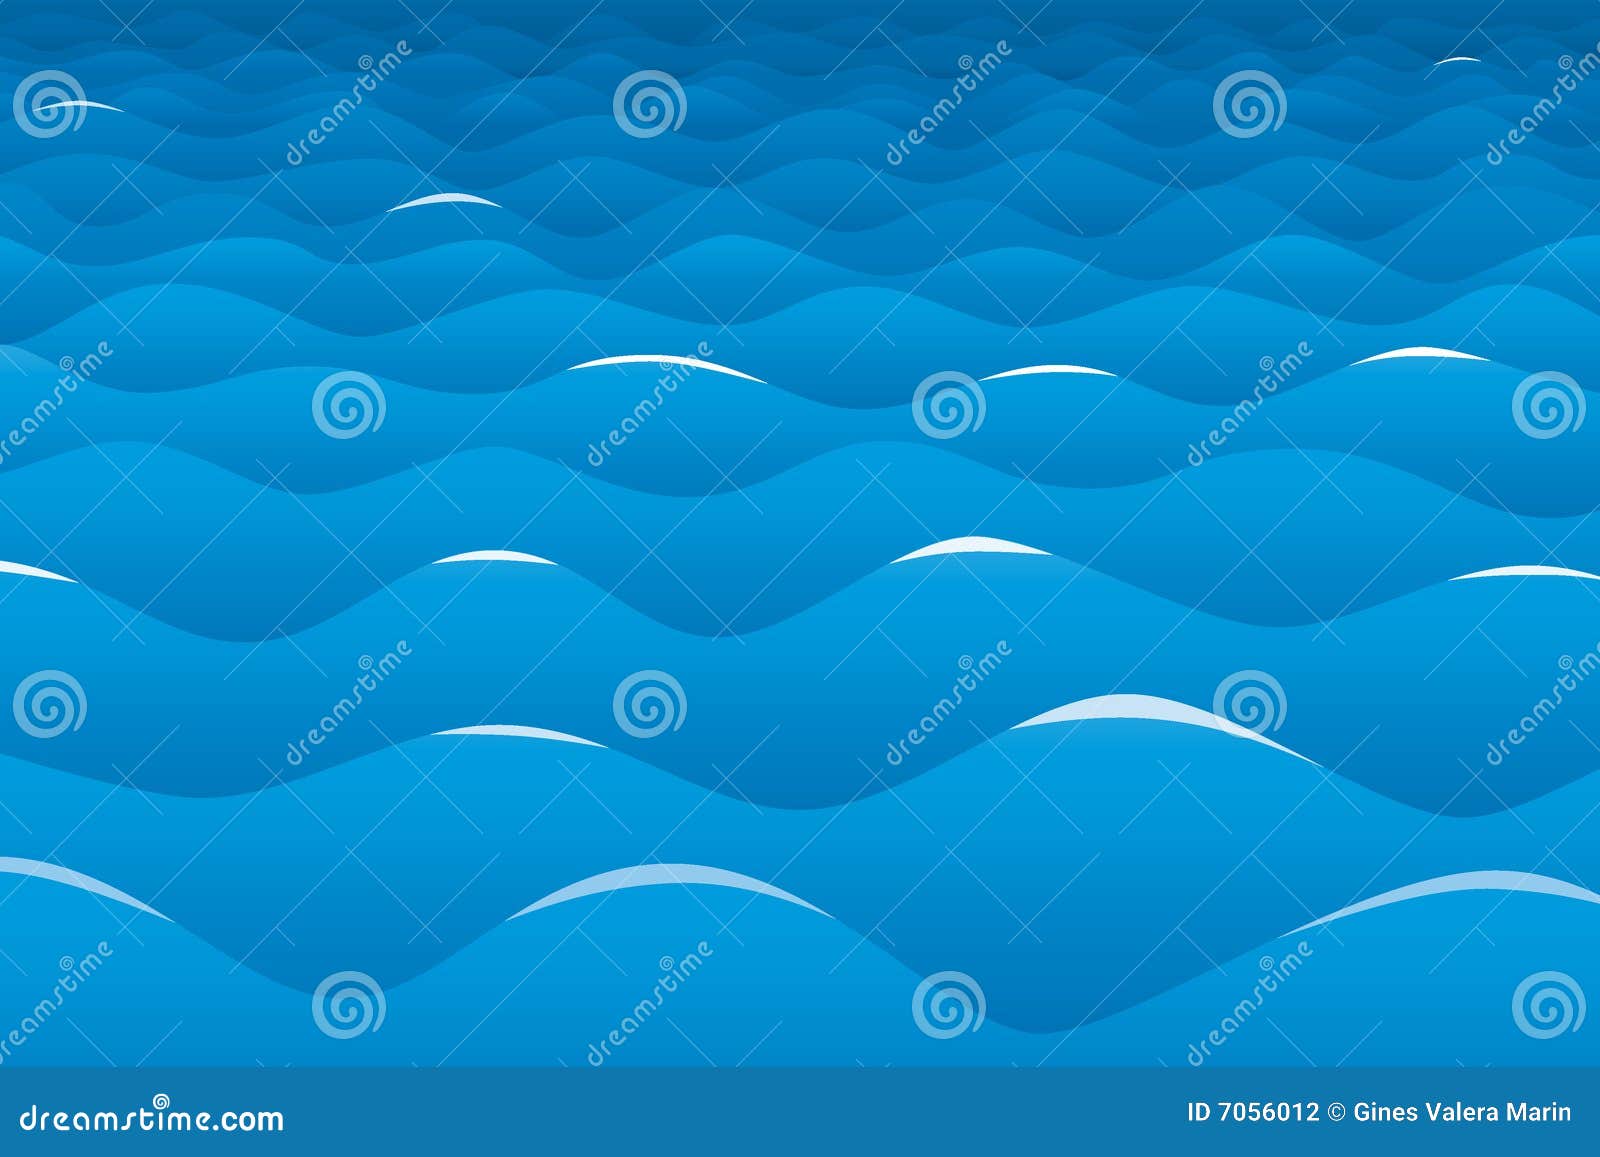 Calm ocean background stock vector. Illustration of blue - 7056012